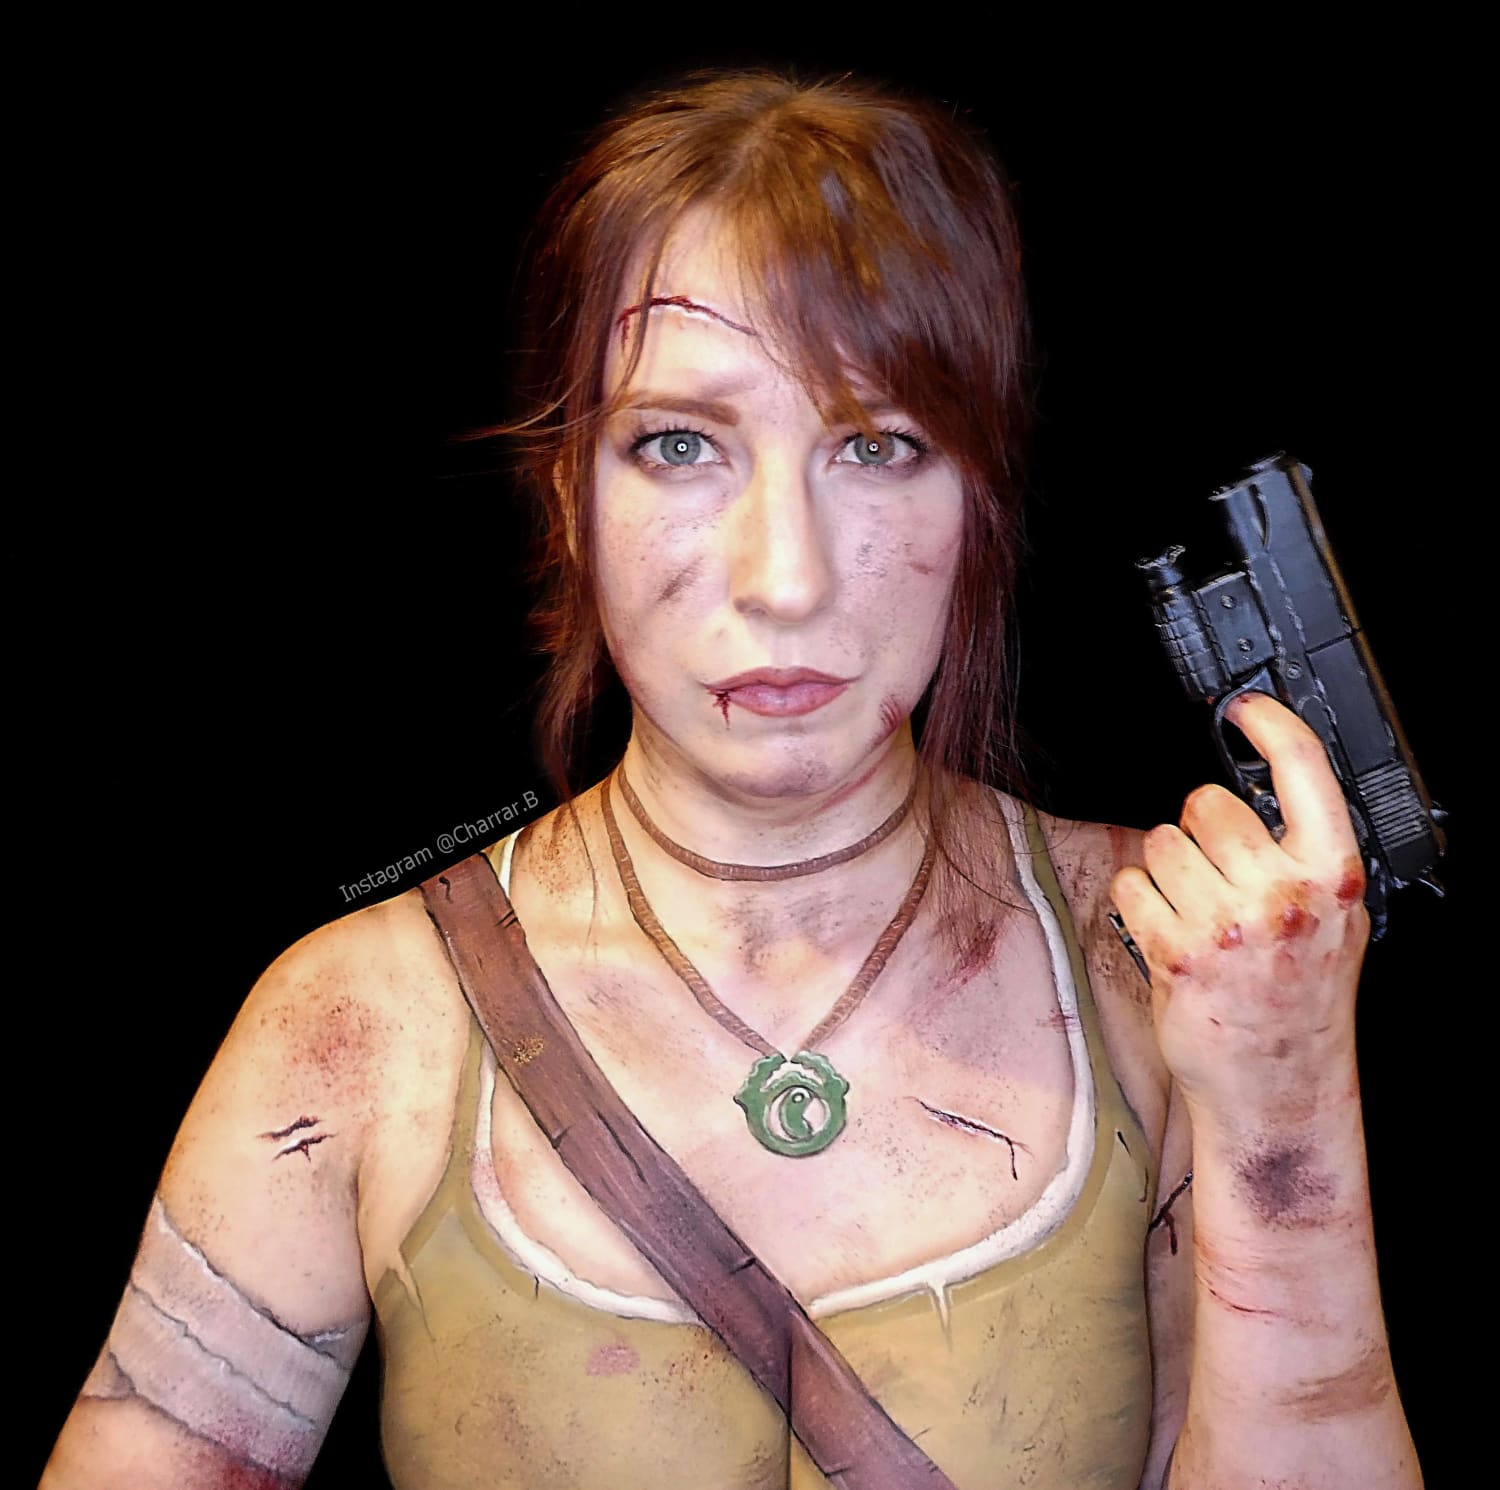 [Self] I bodypainted myself into Lara Croft. Hope you like it!